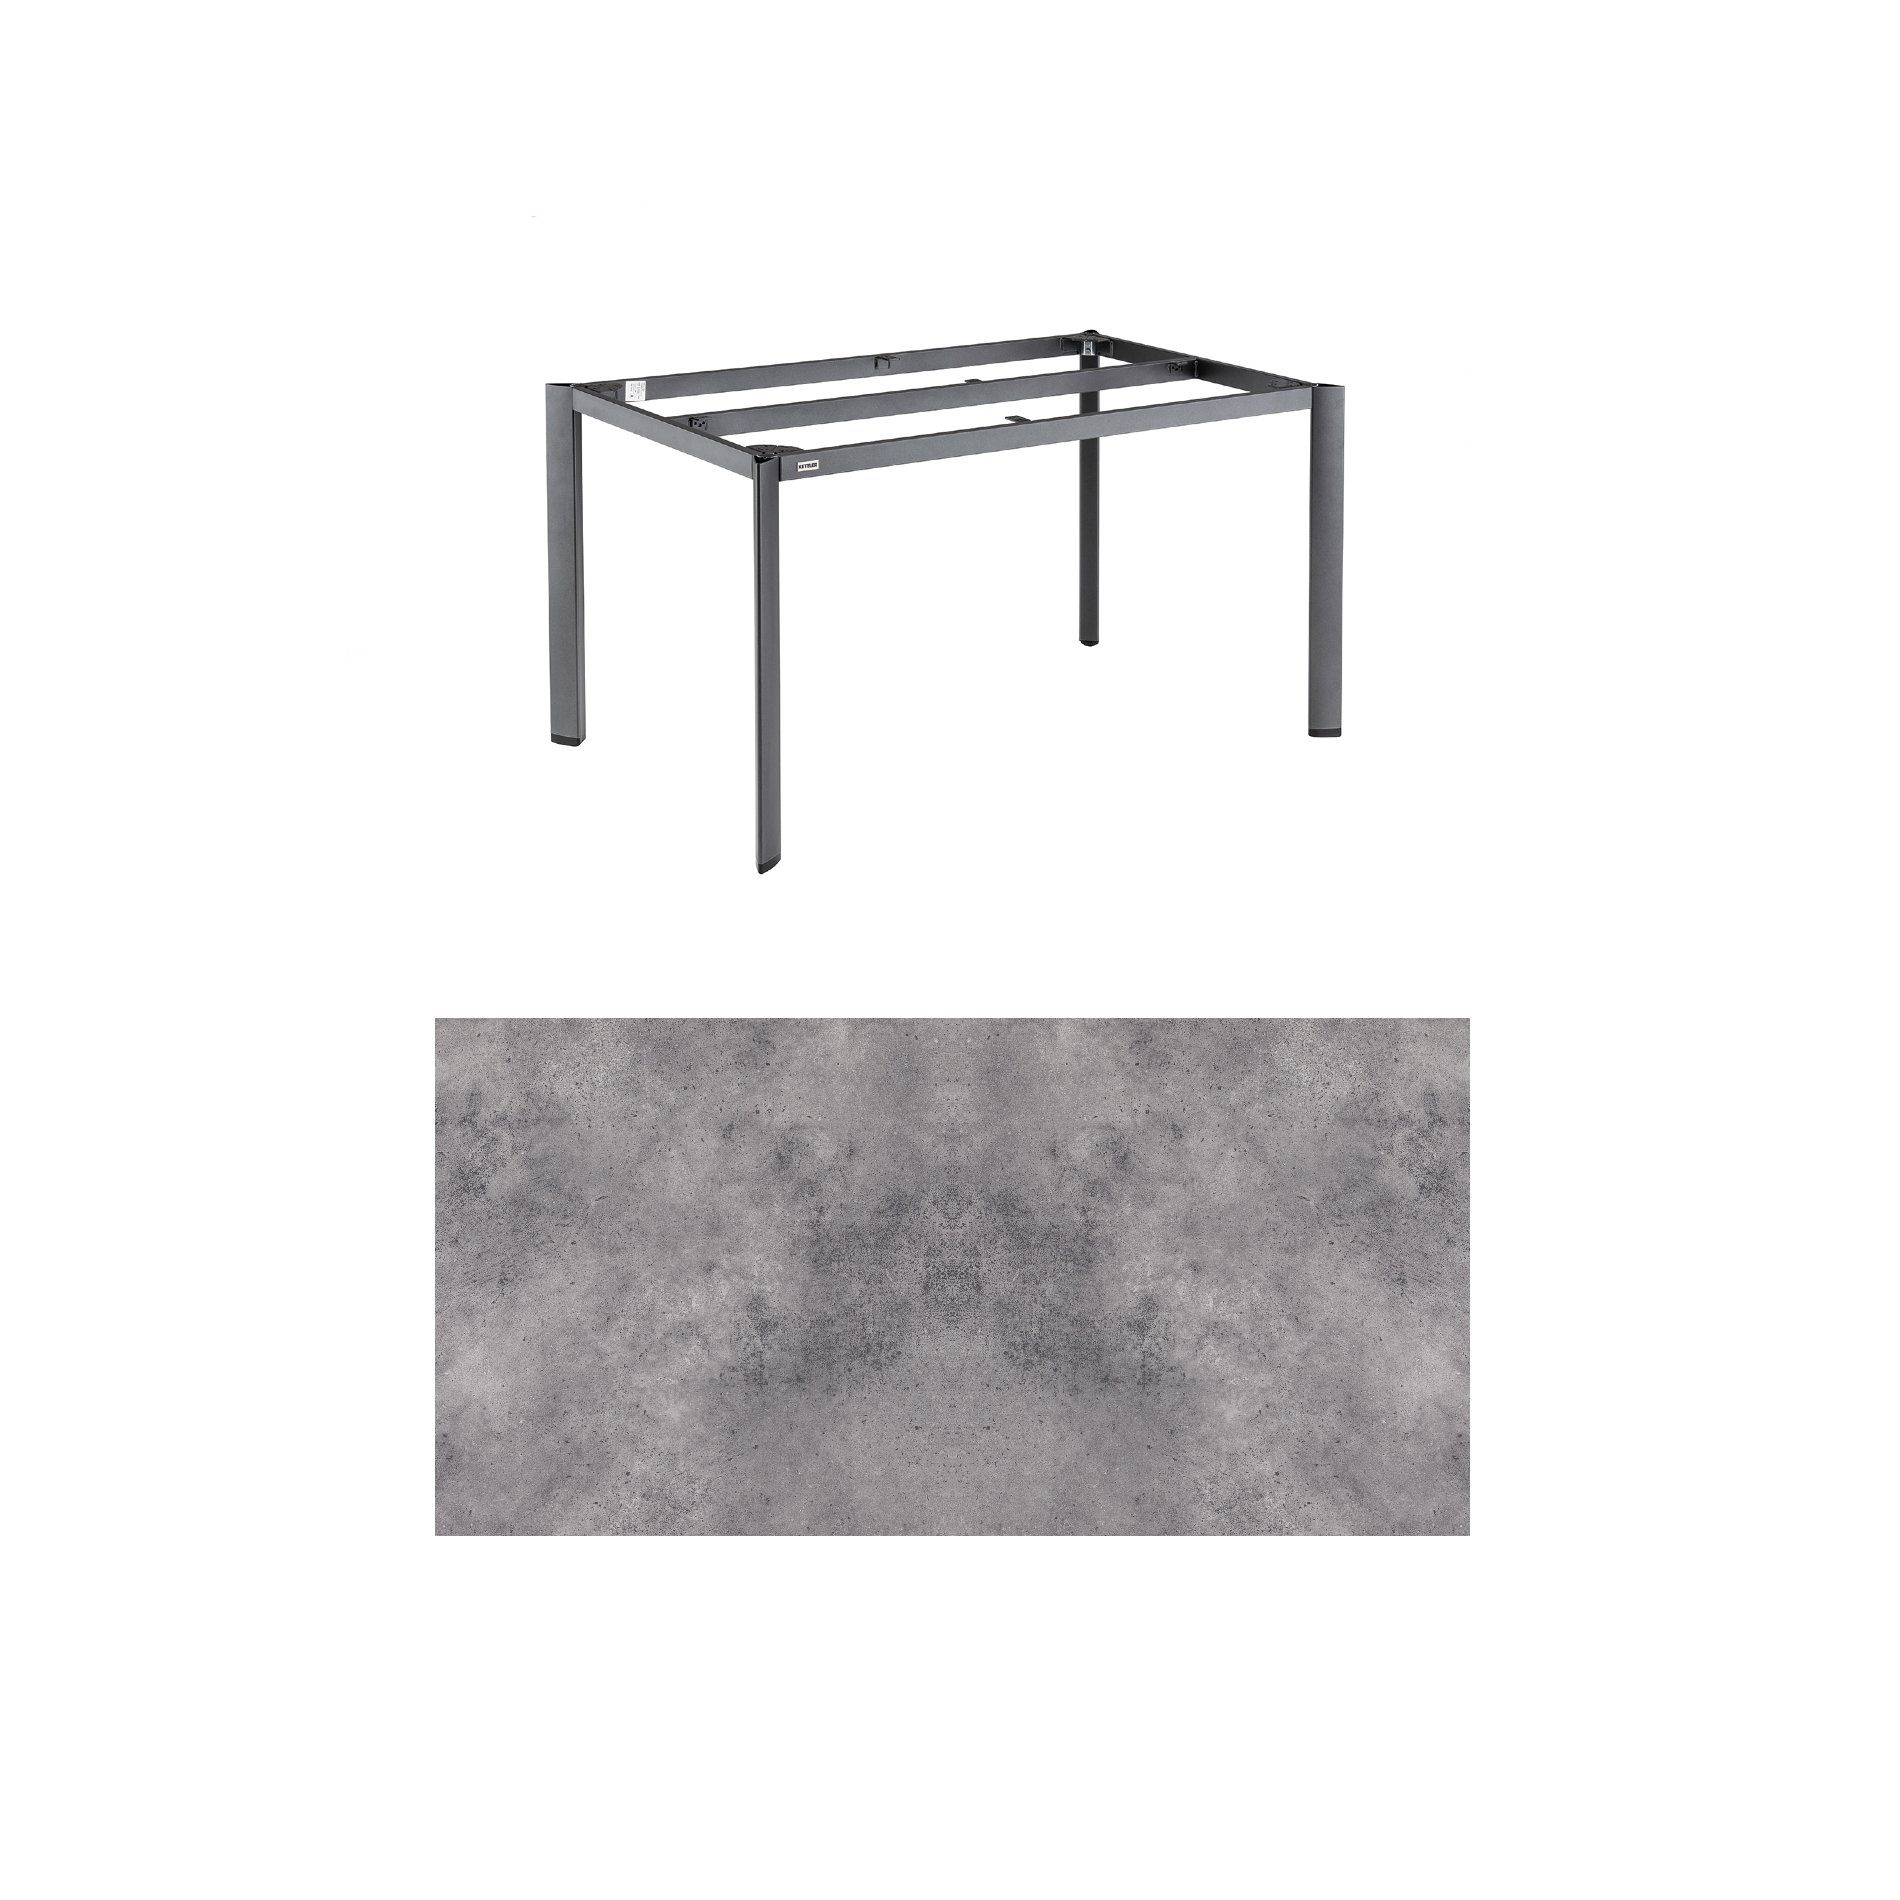 Kettler "Edge" Gartentisch, Gestell Aluminium anthrazit, Tischplatte HPL anthrazit, 140x70 cm